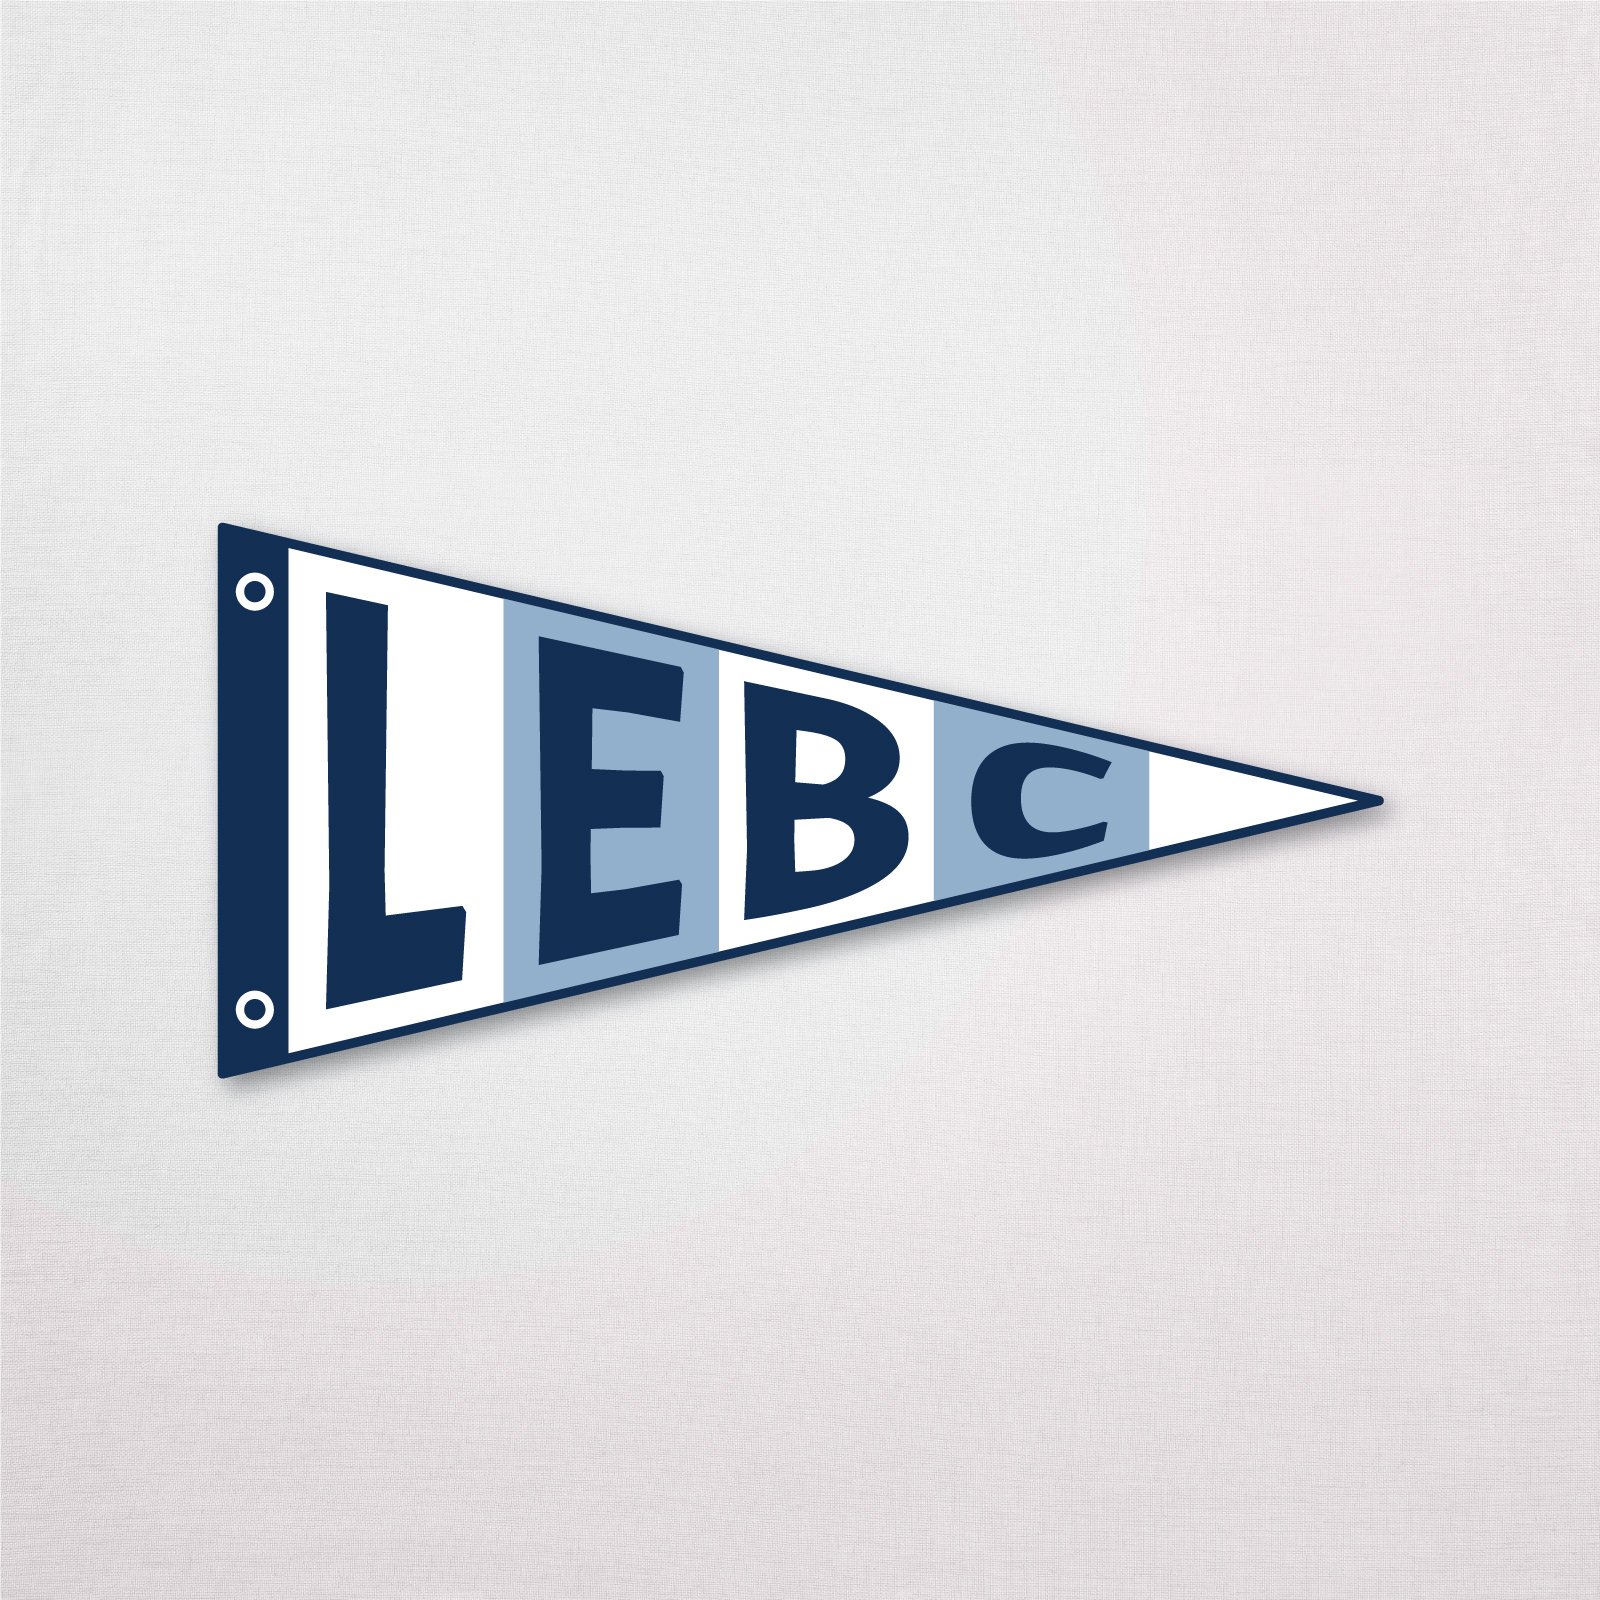 Lake Erie Boat Club logo.